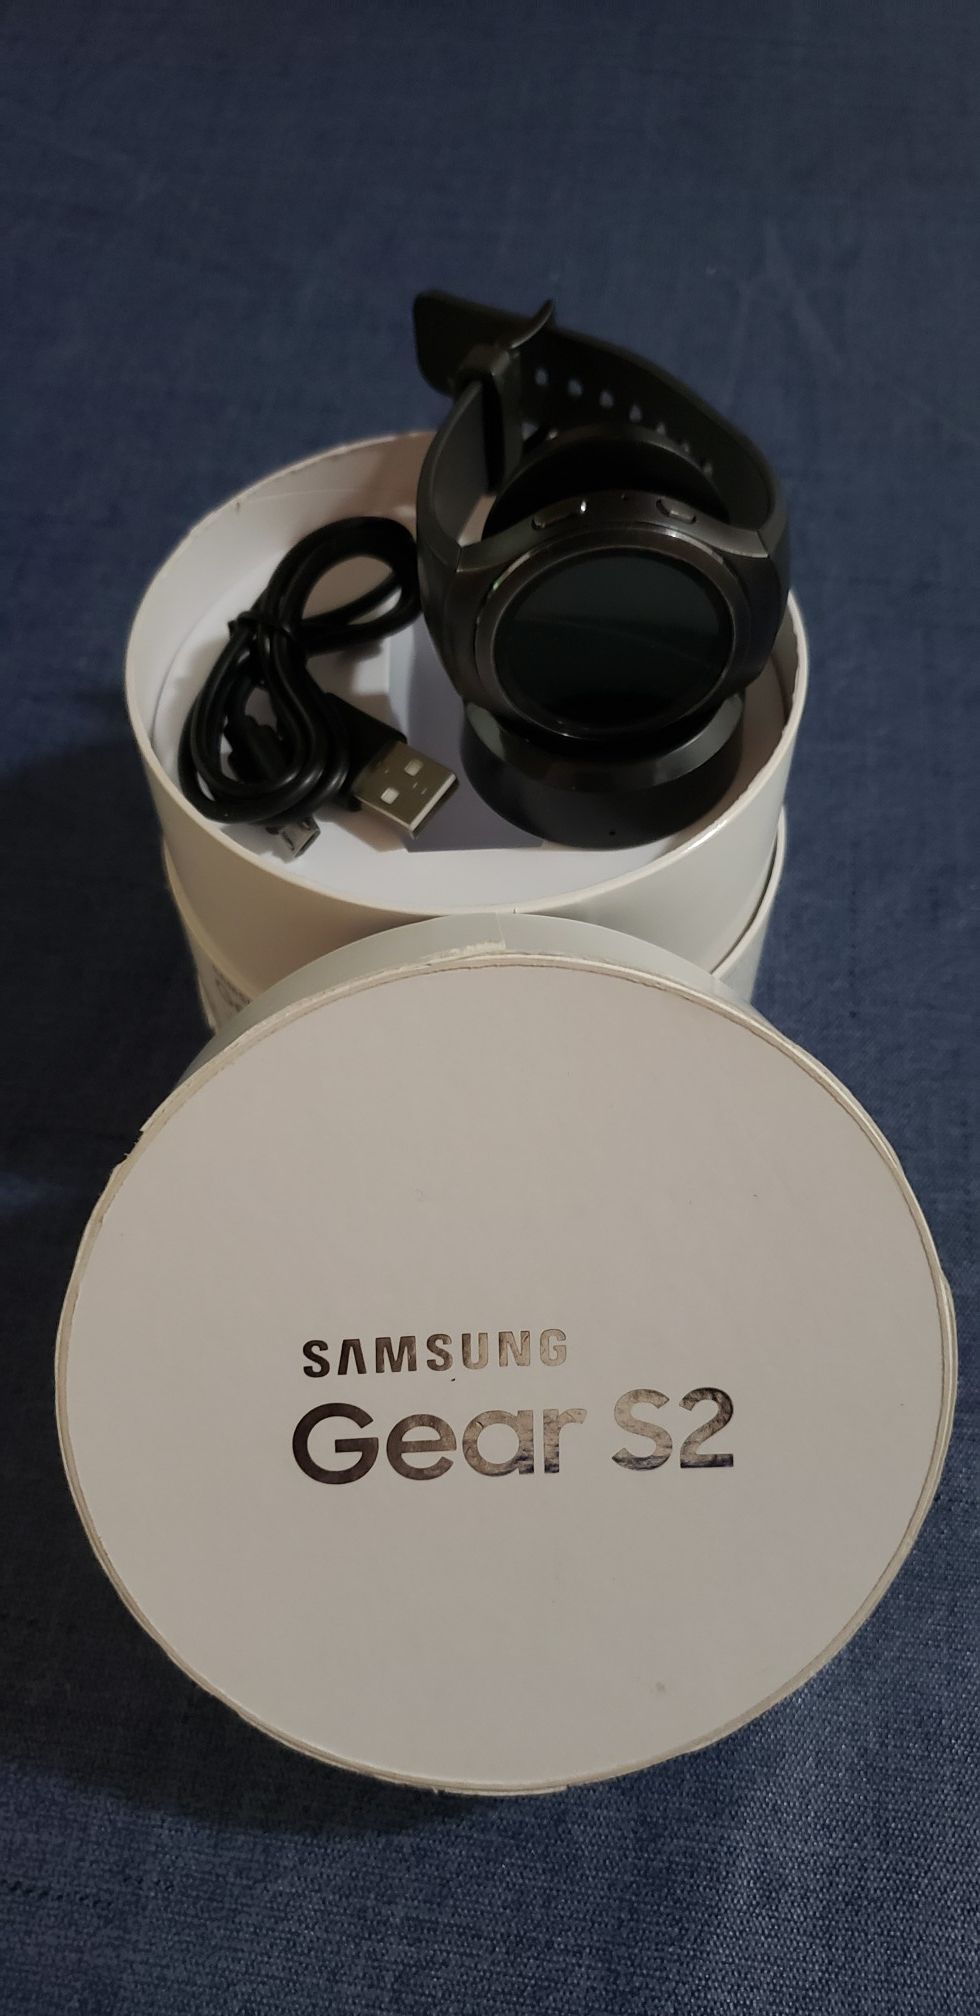 Samsung's gear S2